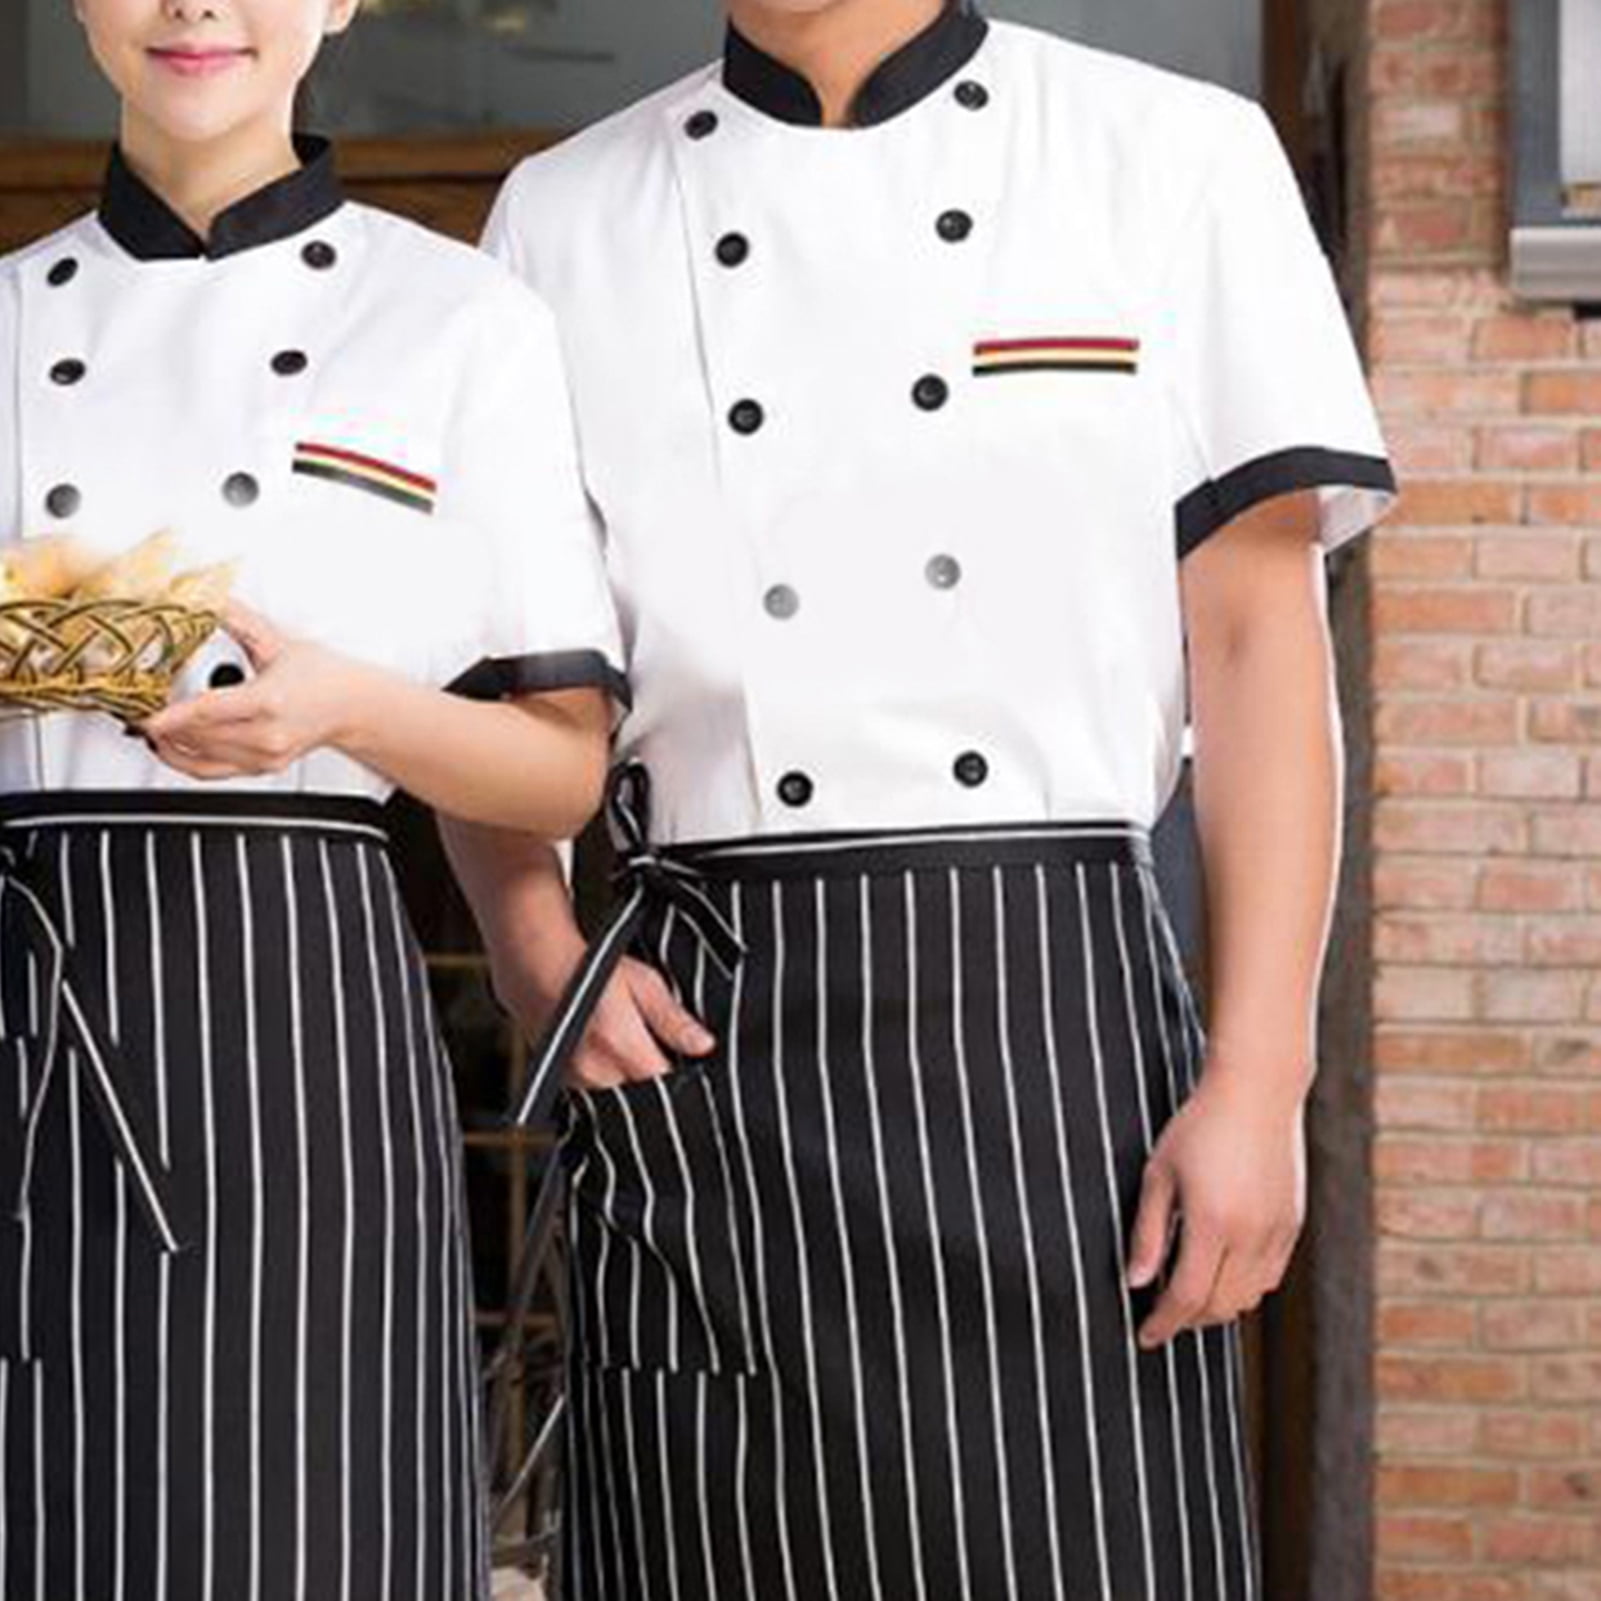 Coat Commercial Kitchen Restaurant Chef Cook Cafe Uniform Catering XXXL 